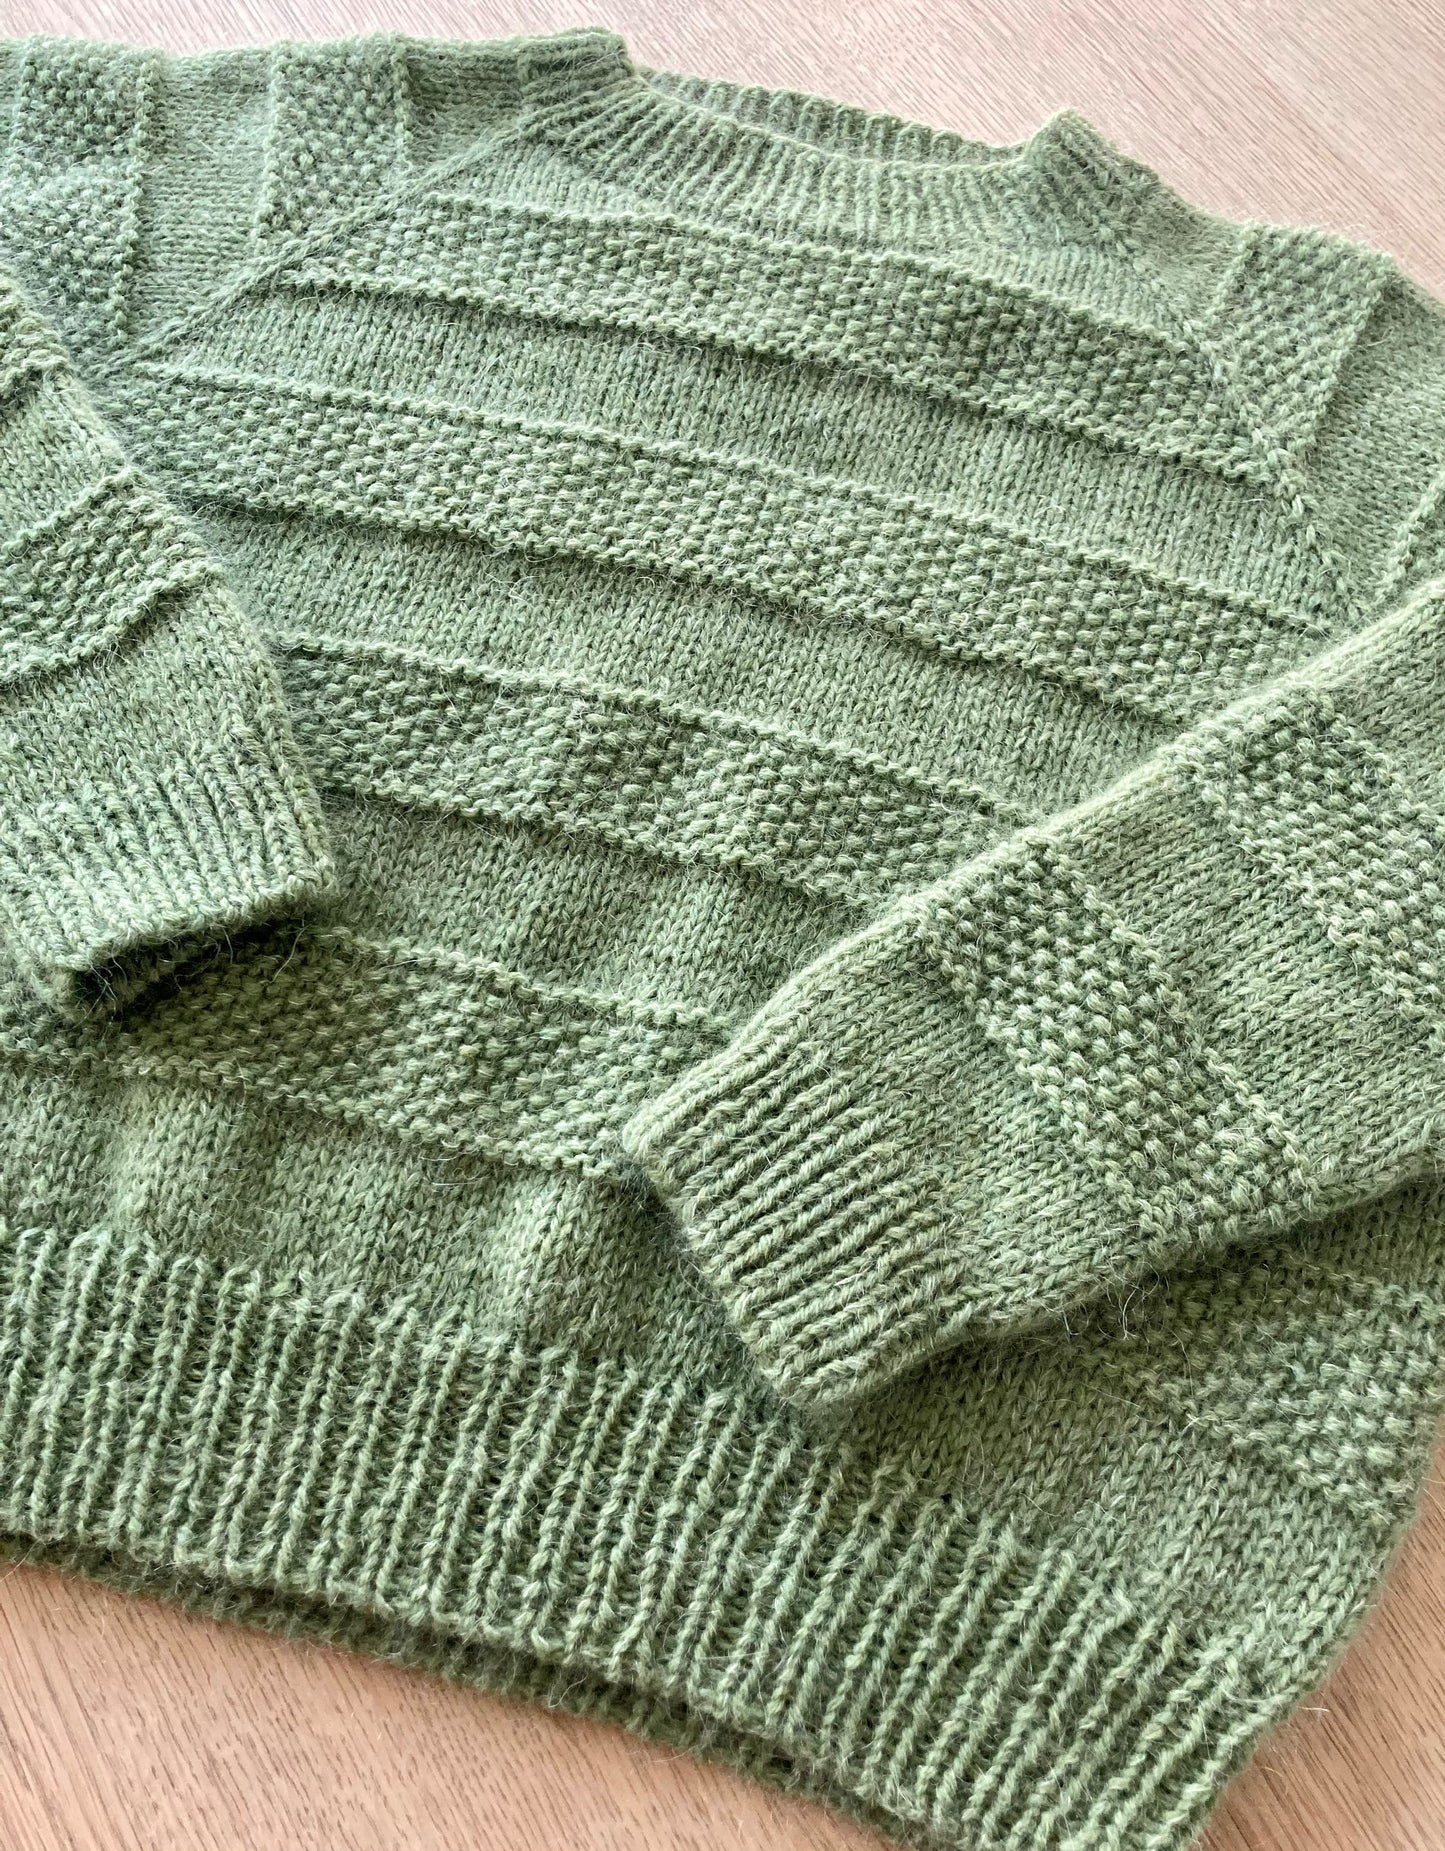 Moss & Stripes Sweater